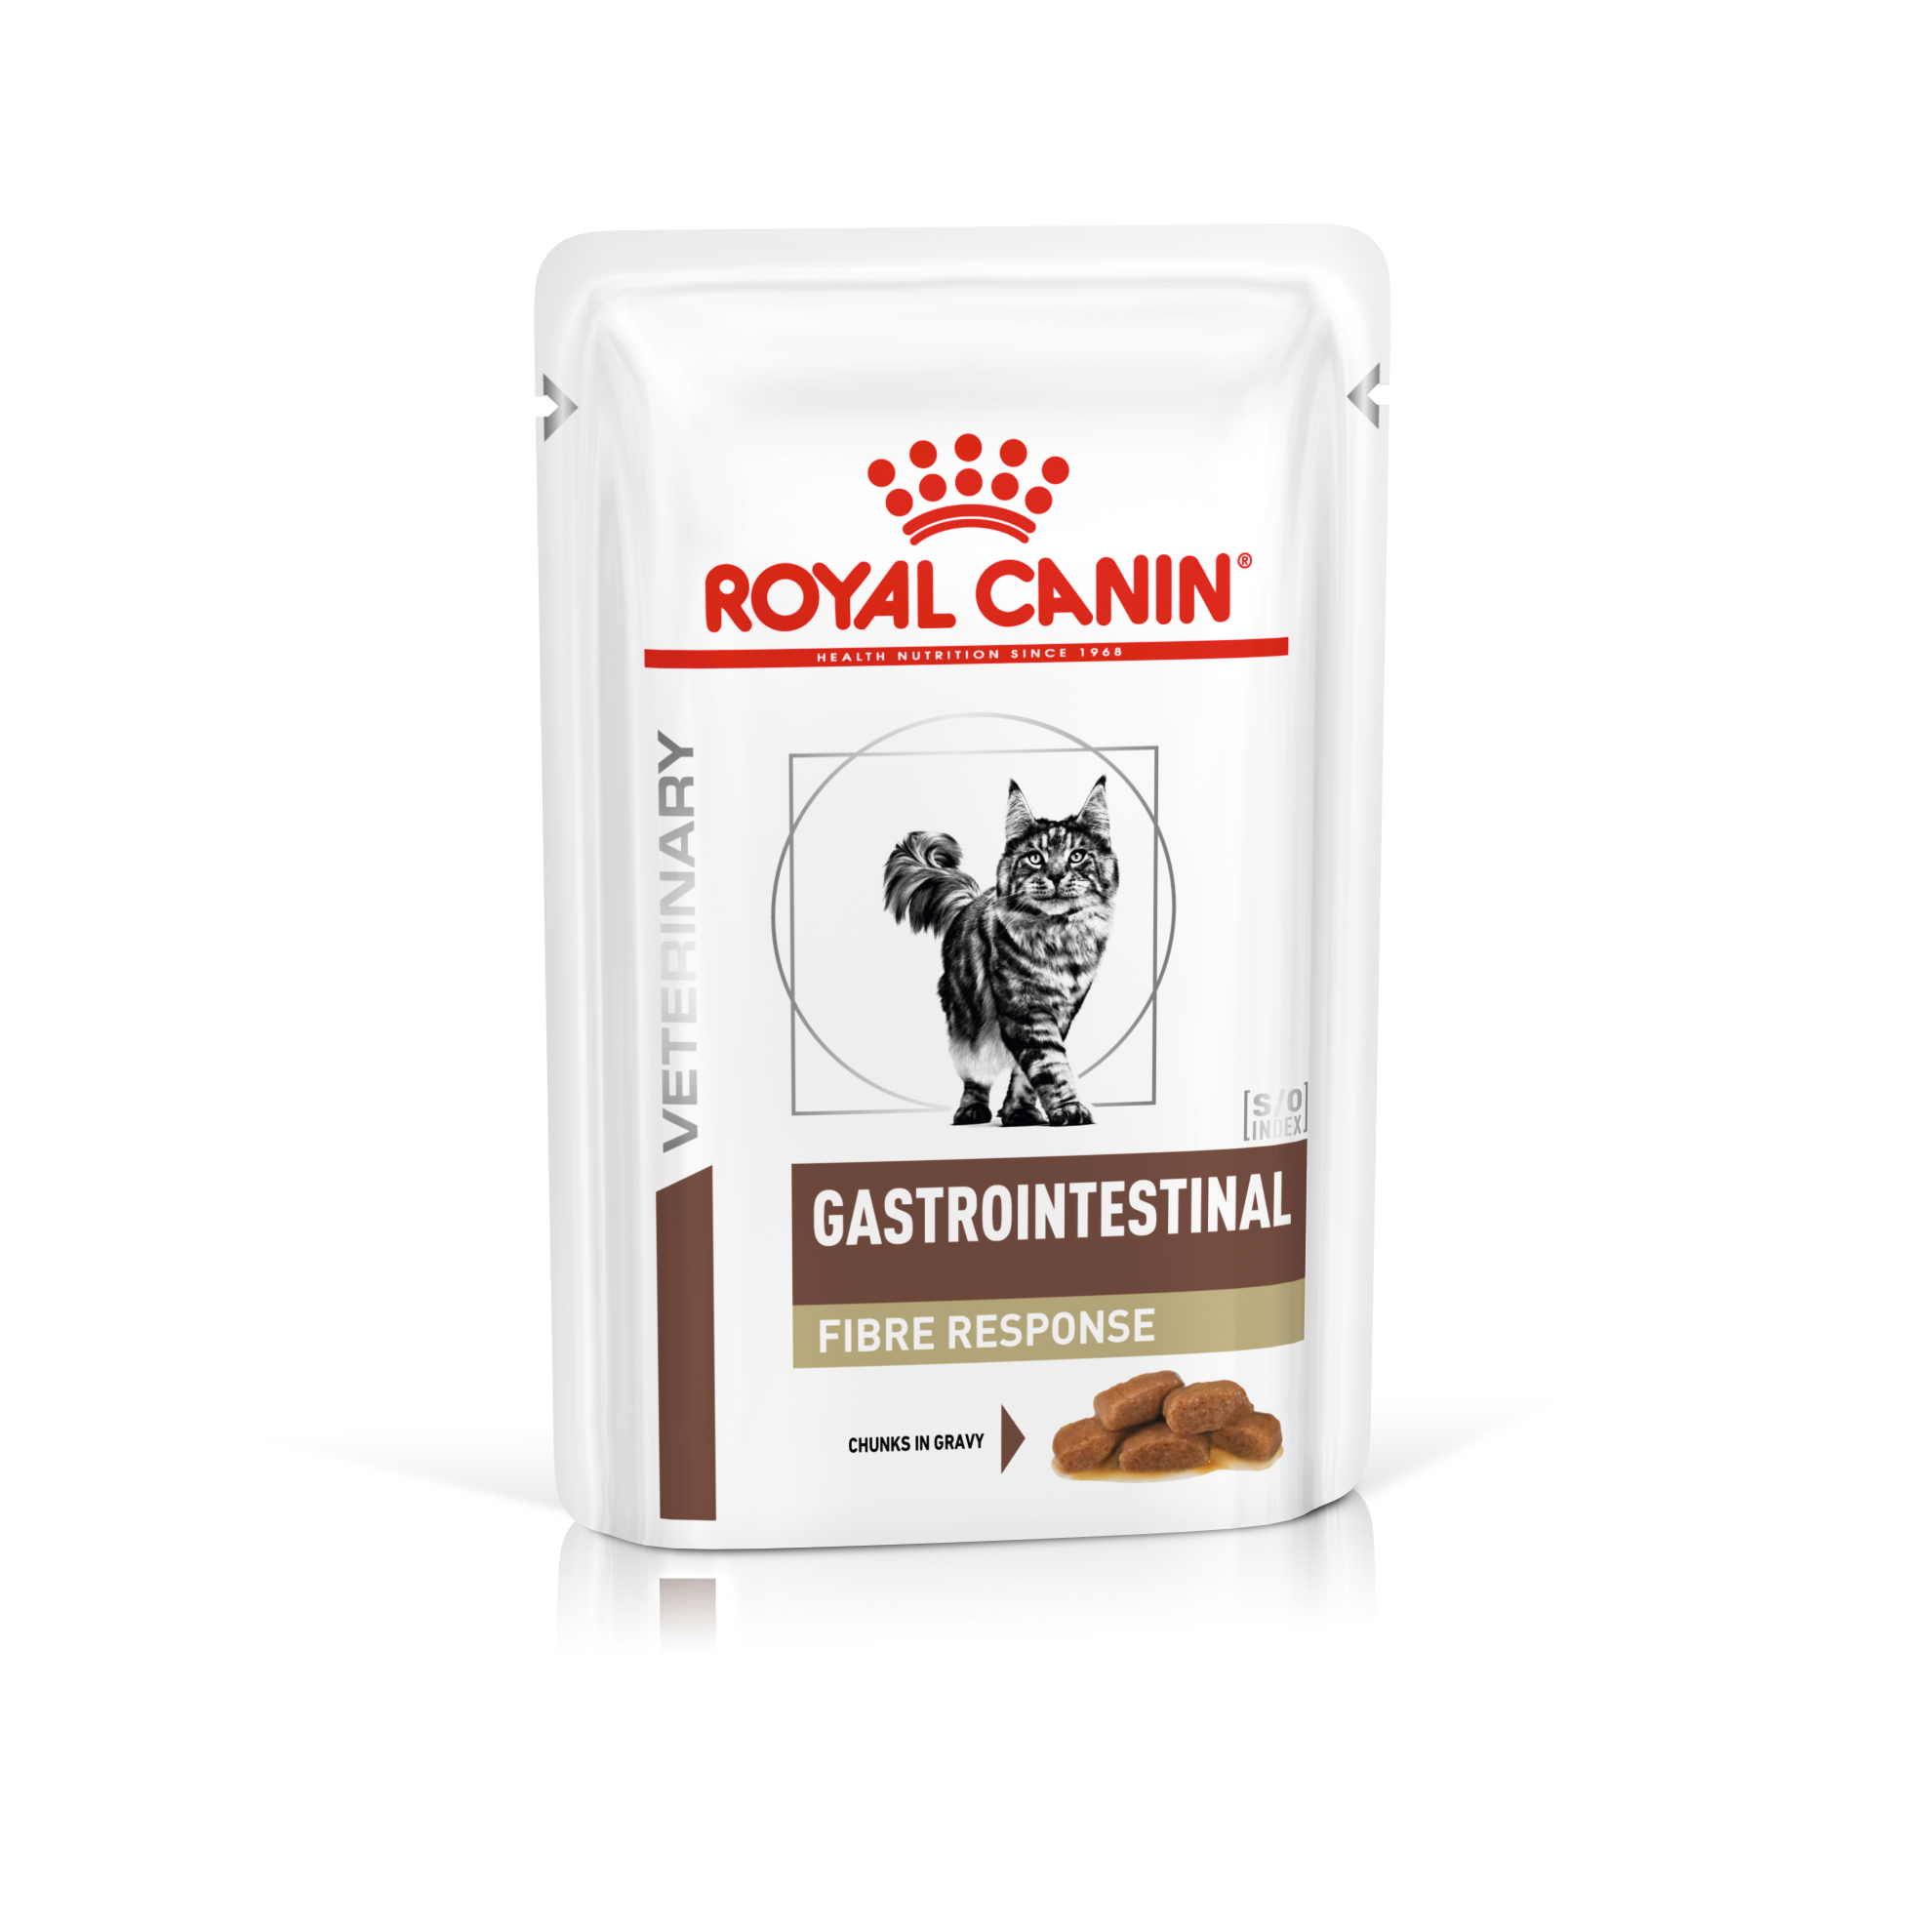 Royal Canin Gastrointestinal Fibre Response Wet Cat Food Pouches